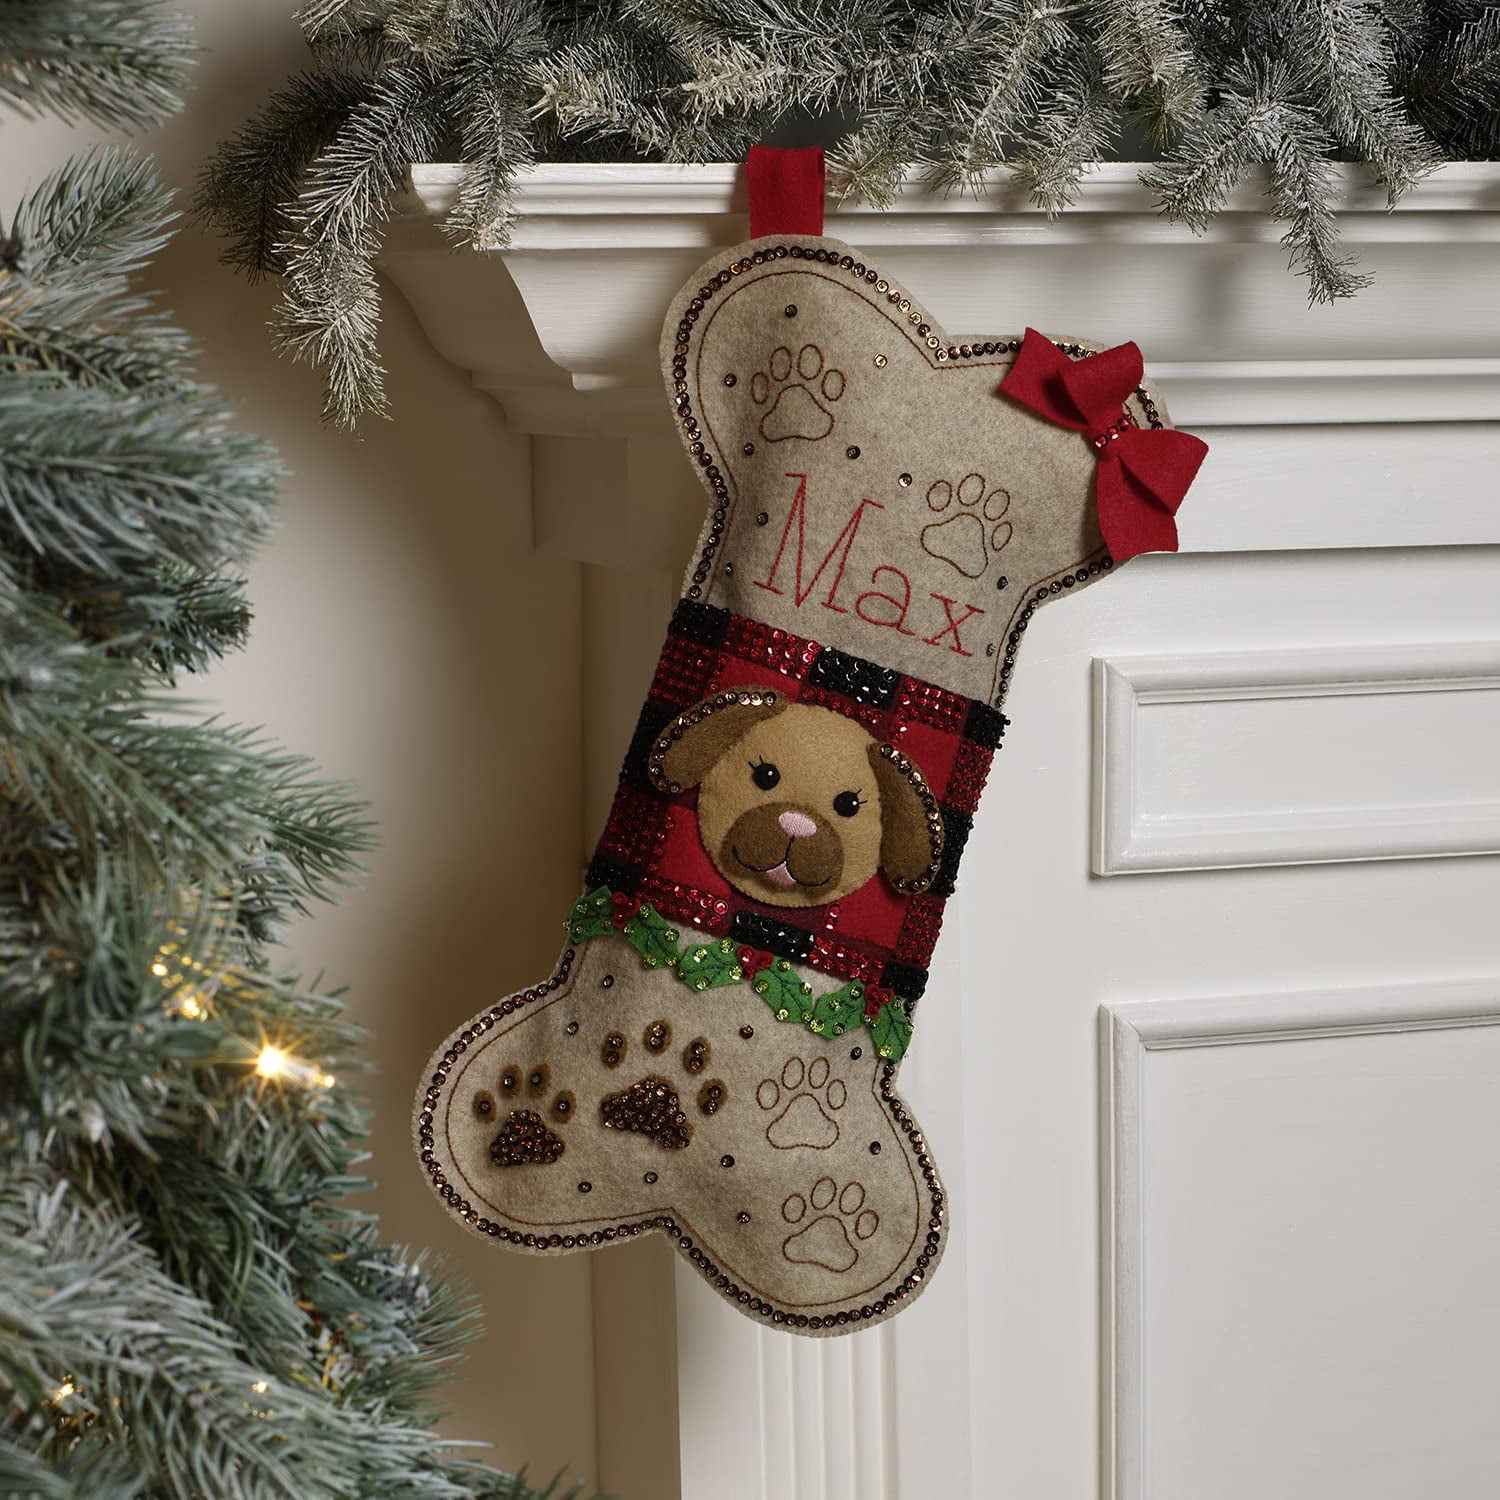 Shop Plaid Bucilla ® Seasonal - Felt - Stocking Kits - Doggy Treat